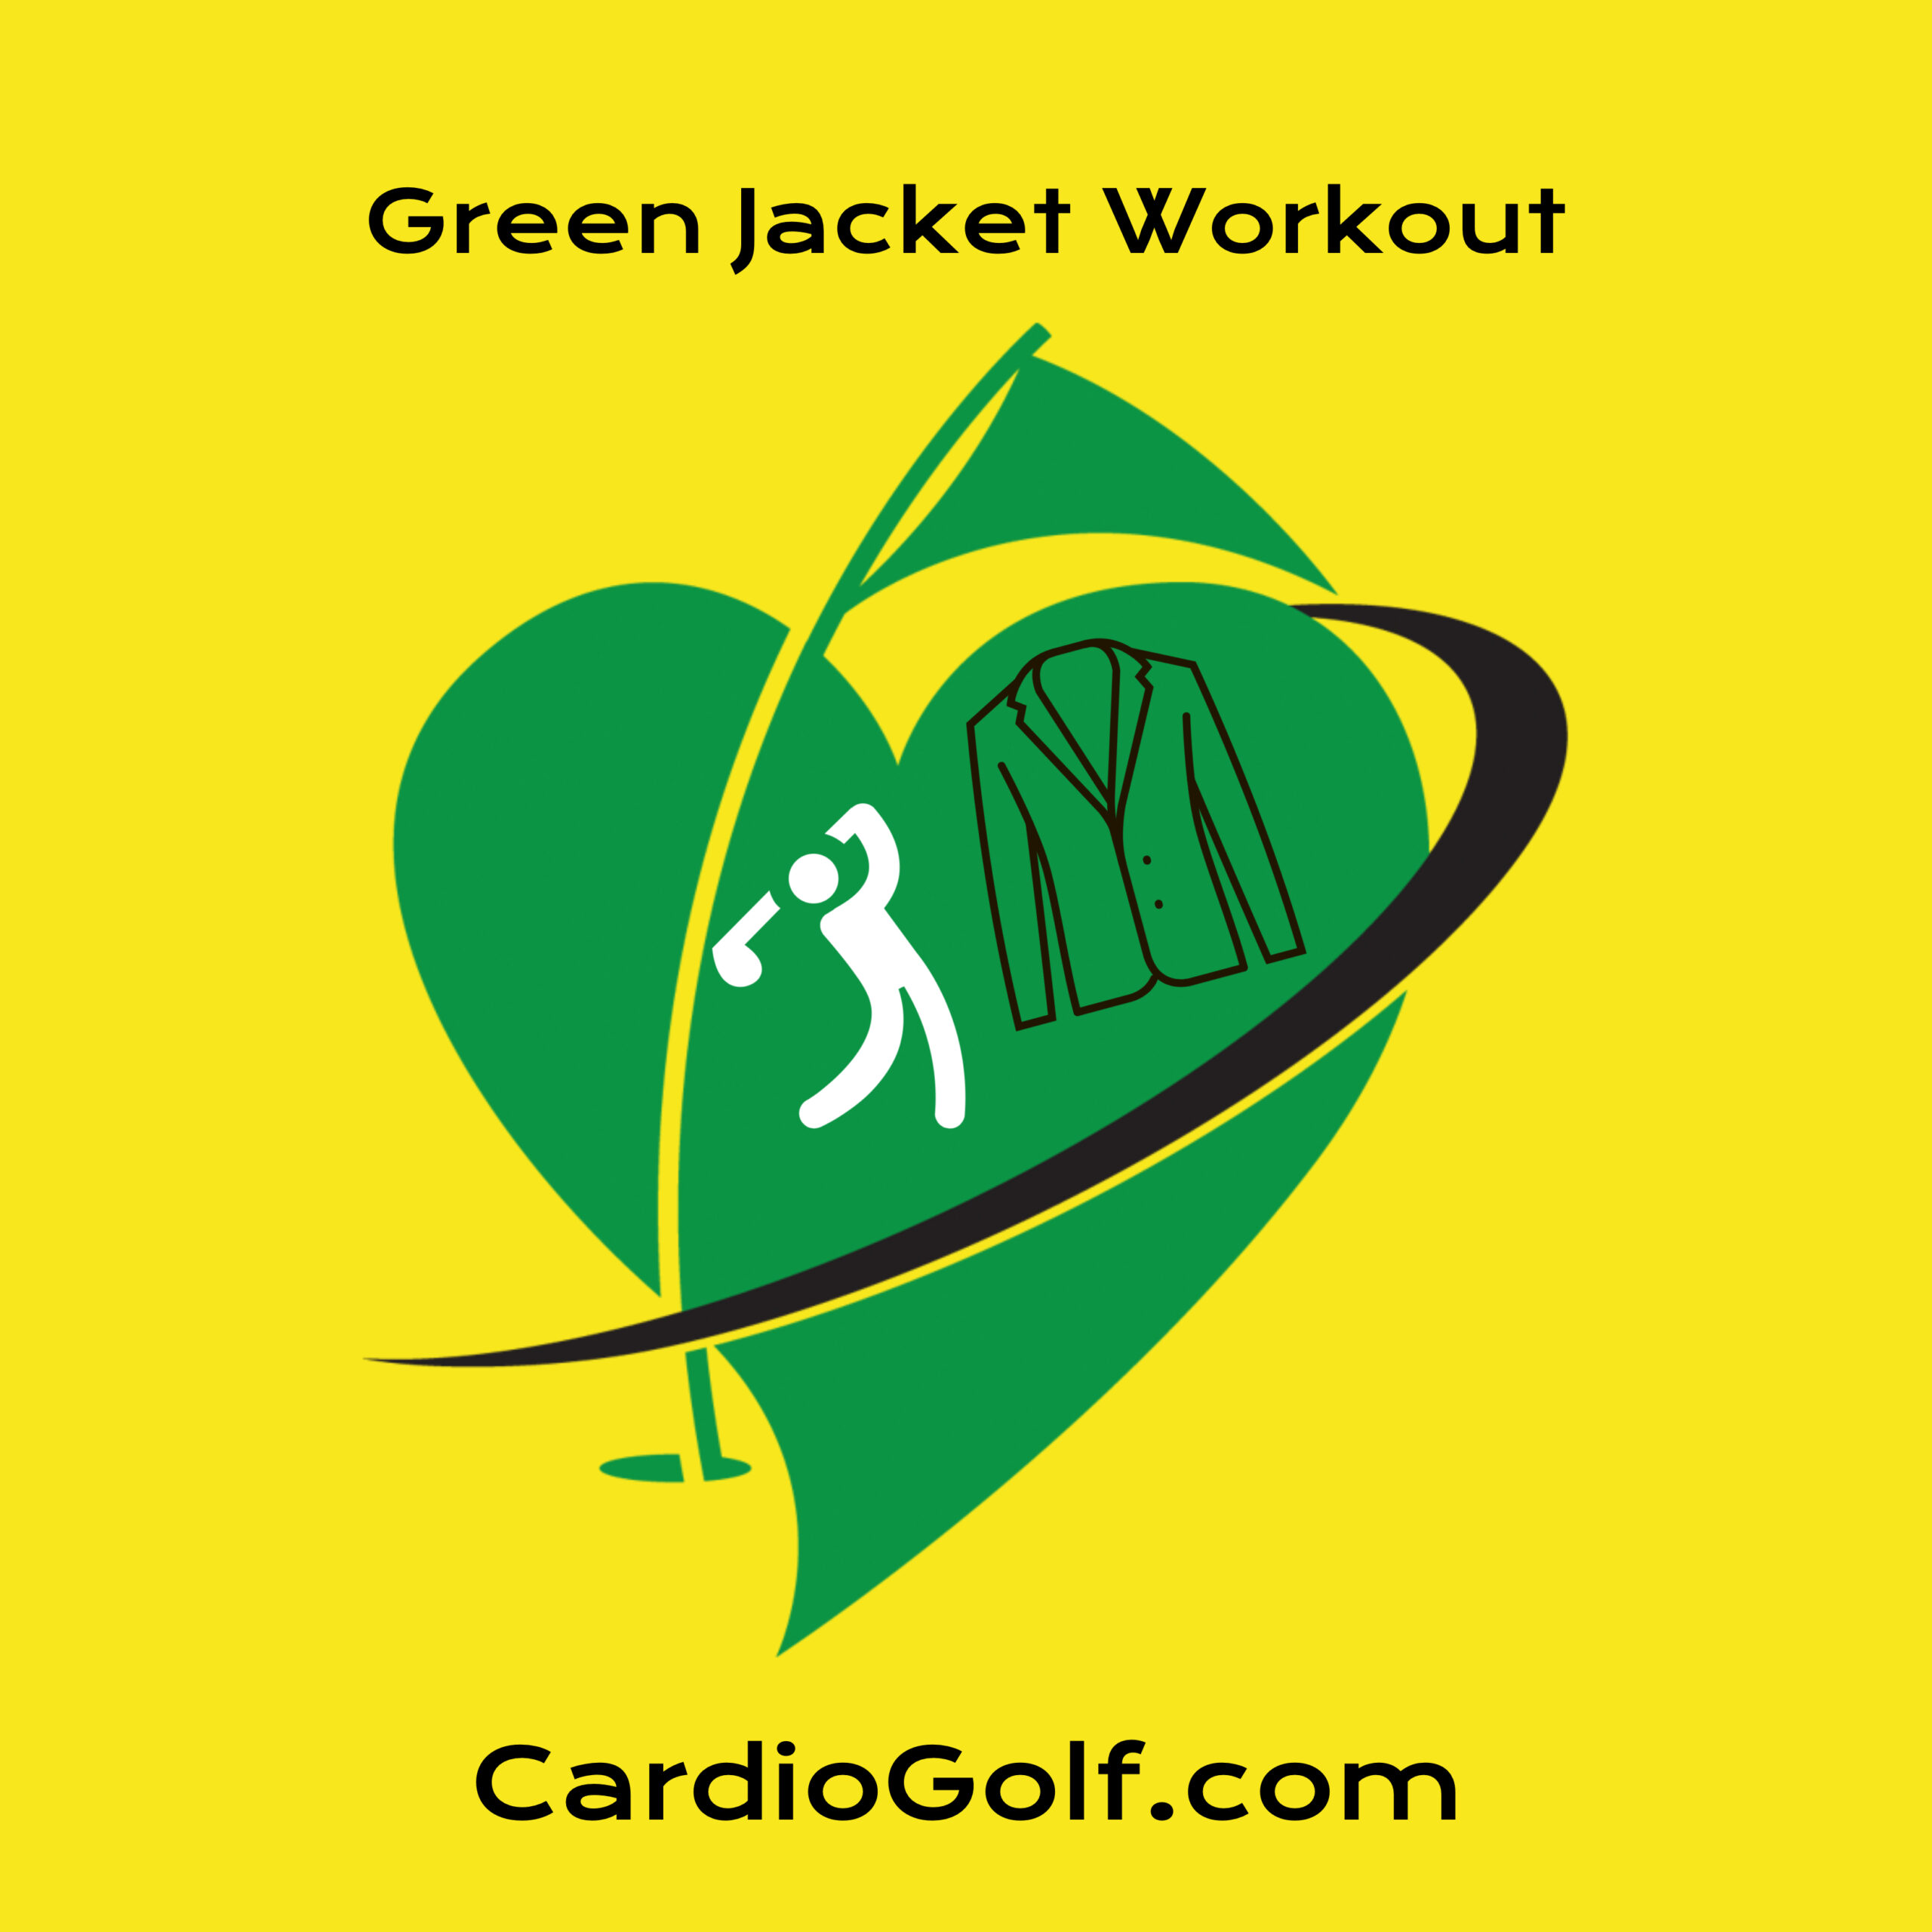 Do the Green Jacket Workout. CardioGolf.com